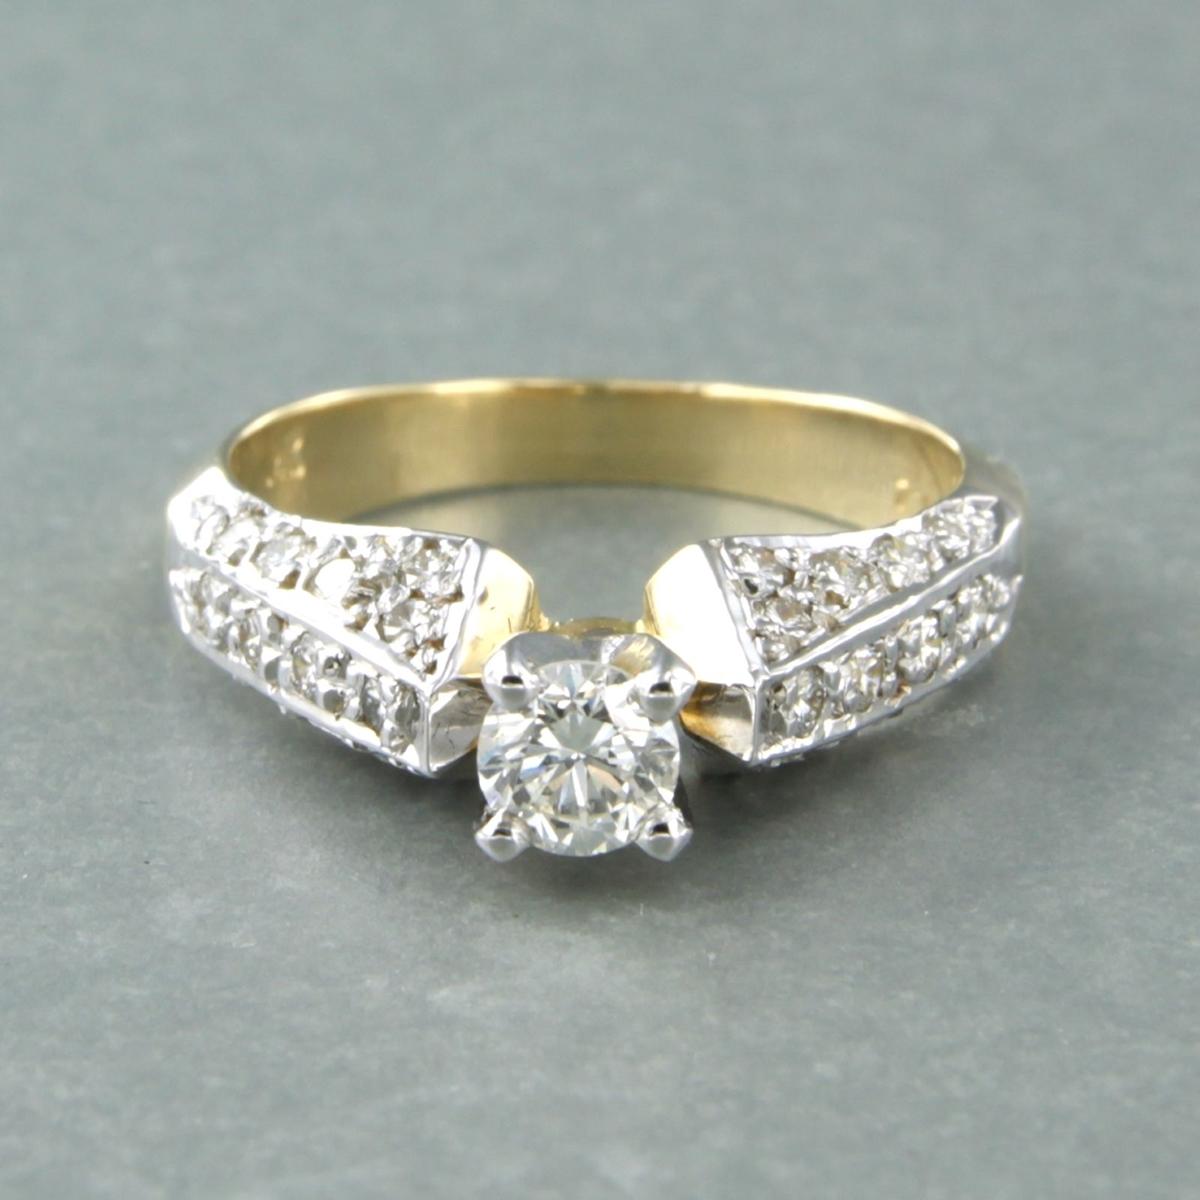 Bicolour Gold Diamond Ring - Ringsize US 6.0
14k bicolour gold ring set with brilliant cut diamond 0.30 carat G/H VS and 0.30 carat F/G VS/SI

The head of the ring is 0.5 cm wide
Ringsize US 6.0 / EU 16.75 (52)
Weight : 4.1 gram

Set